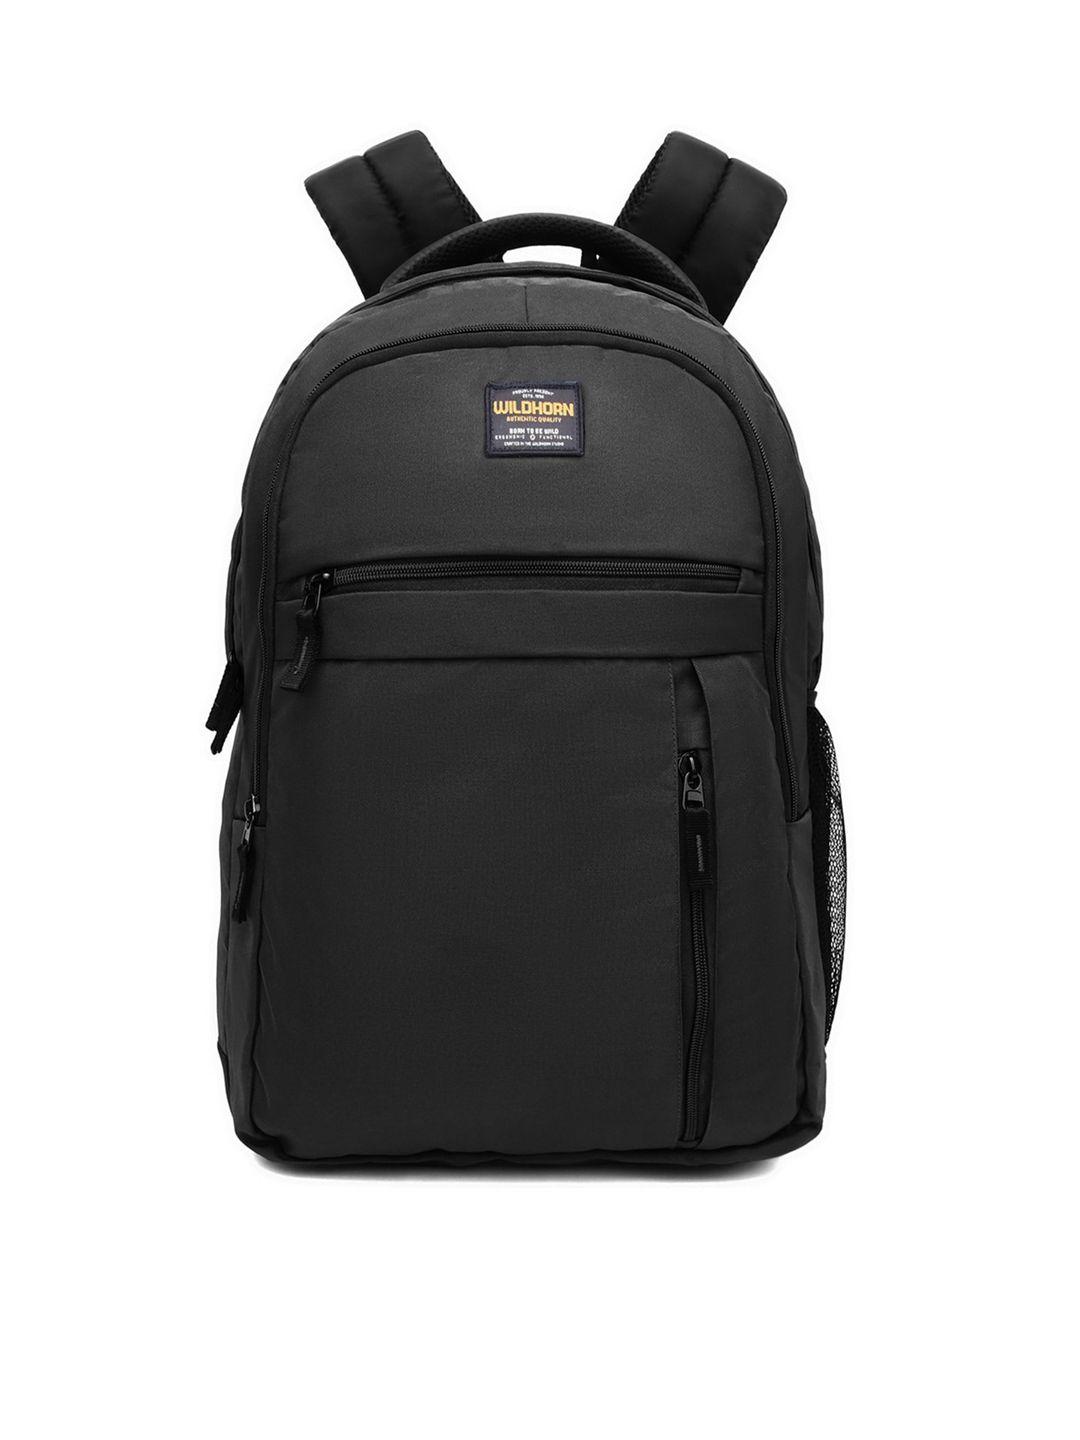 wildhorn unisex black backpack with compression straps